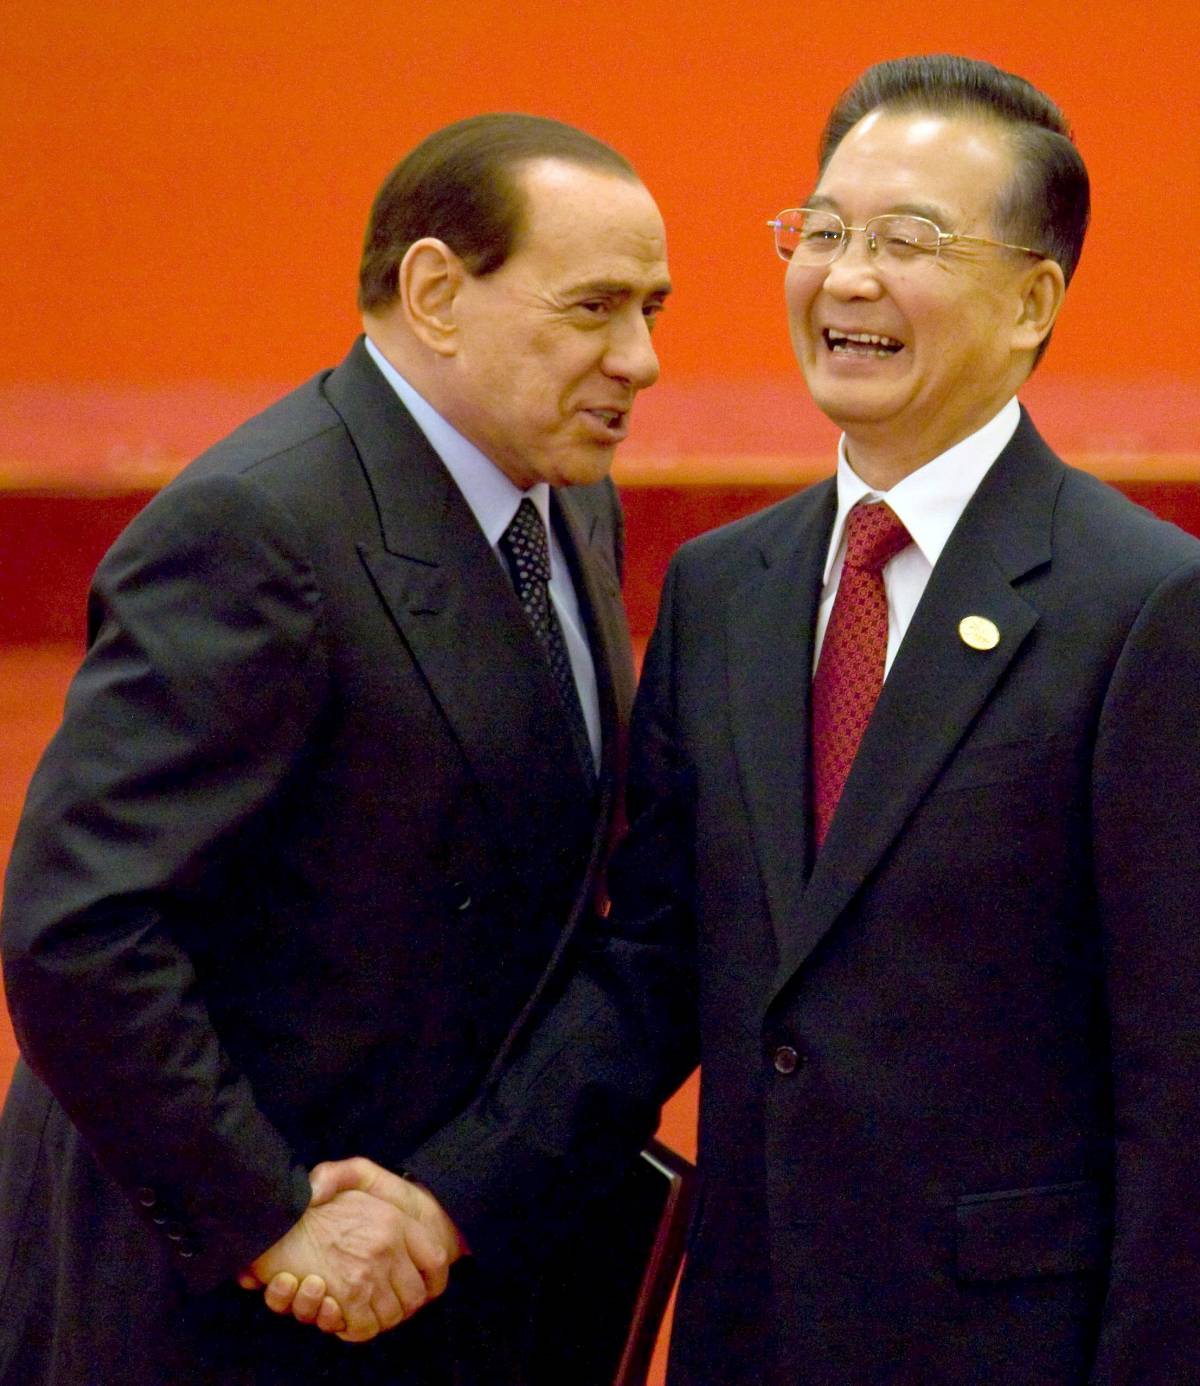 Berlusconi avverte:
"Oggi Pd in piazza
attenti ai facinorosi"